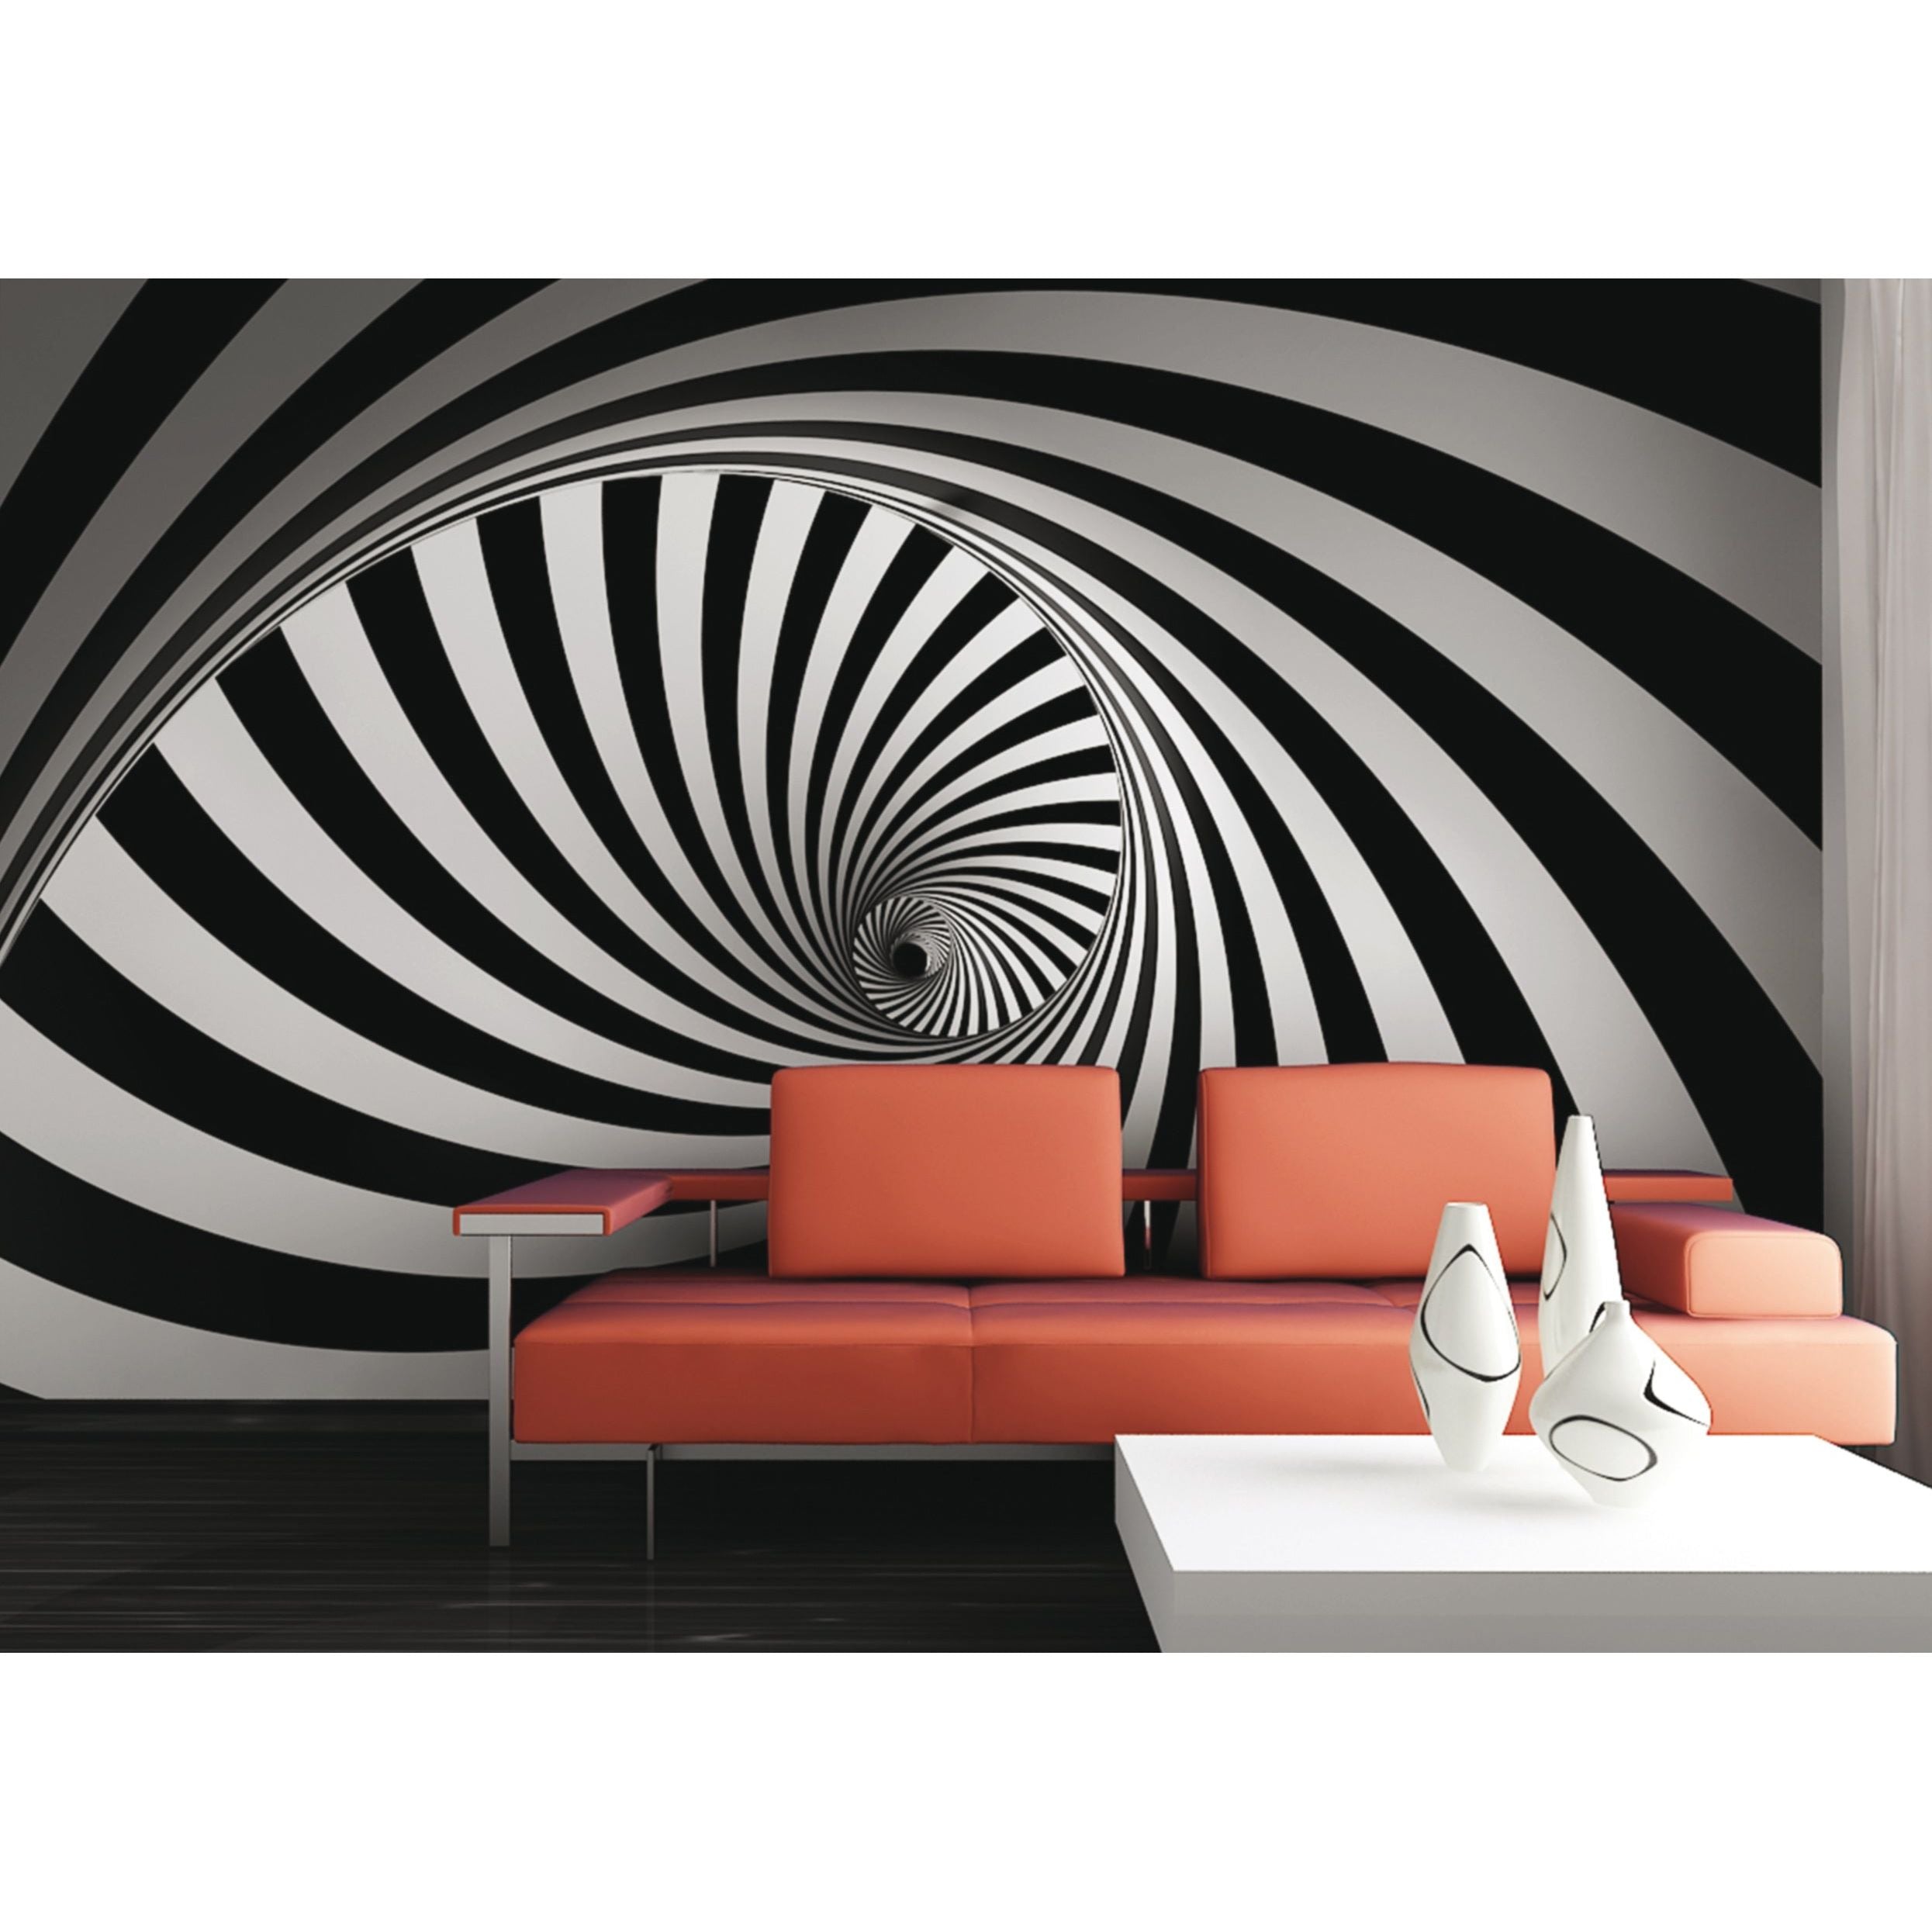 Enigmatic Elegance: Black & White Spiral Wall Mural